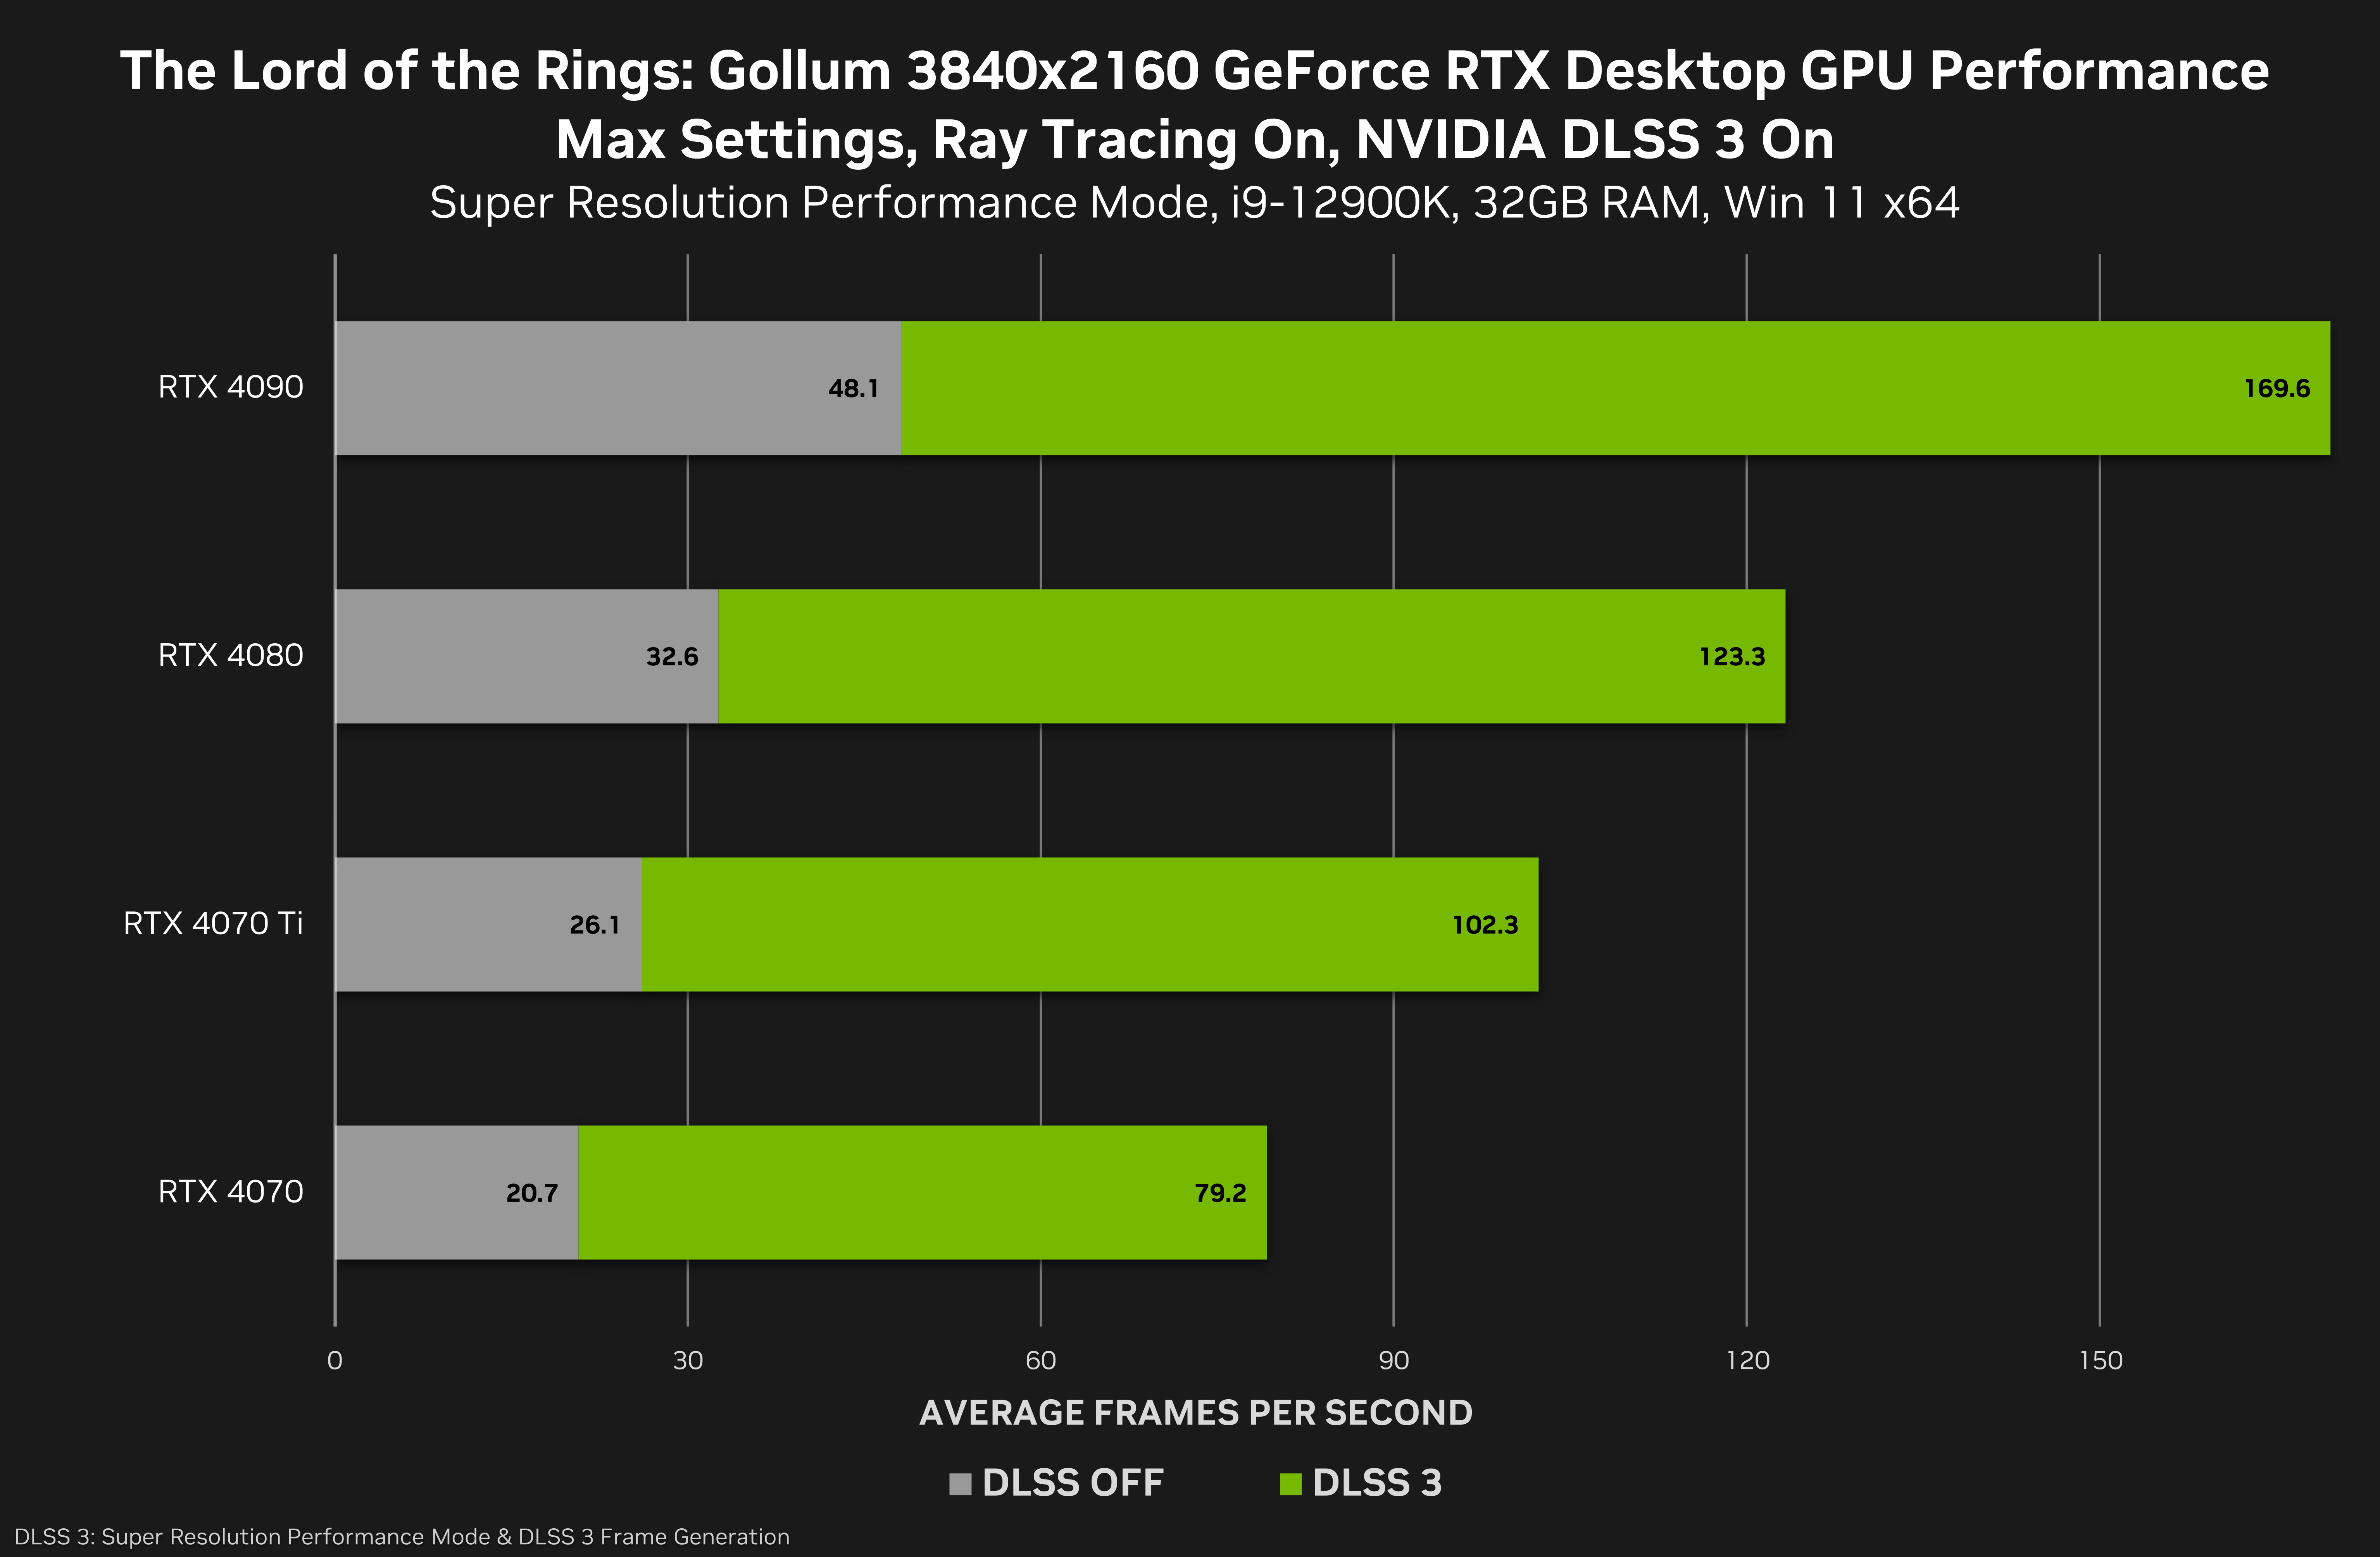 GeForce RTX 4070 Ti: 1080p Gaming Performance - Nvidia GeForce RTX